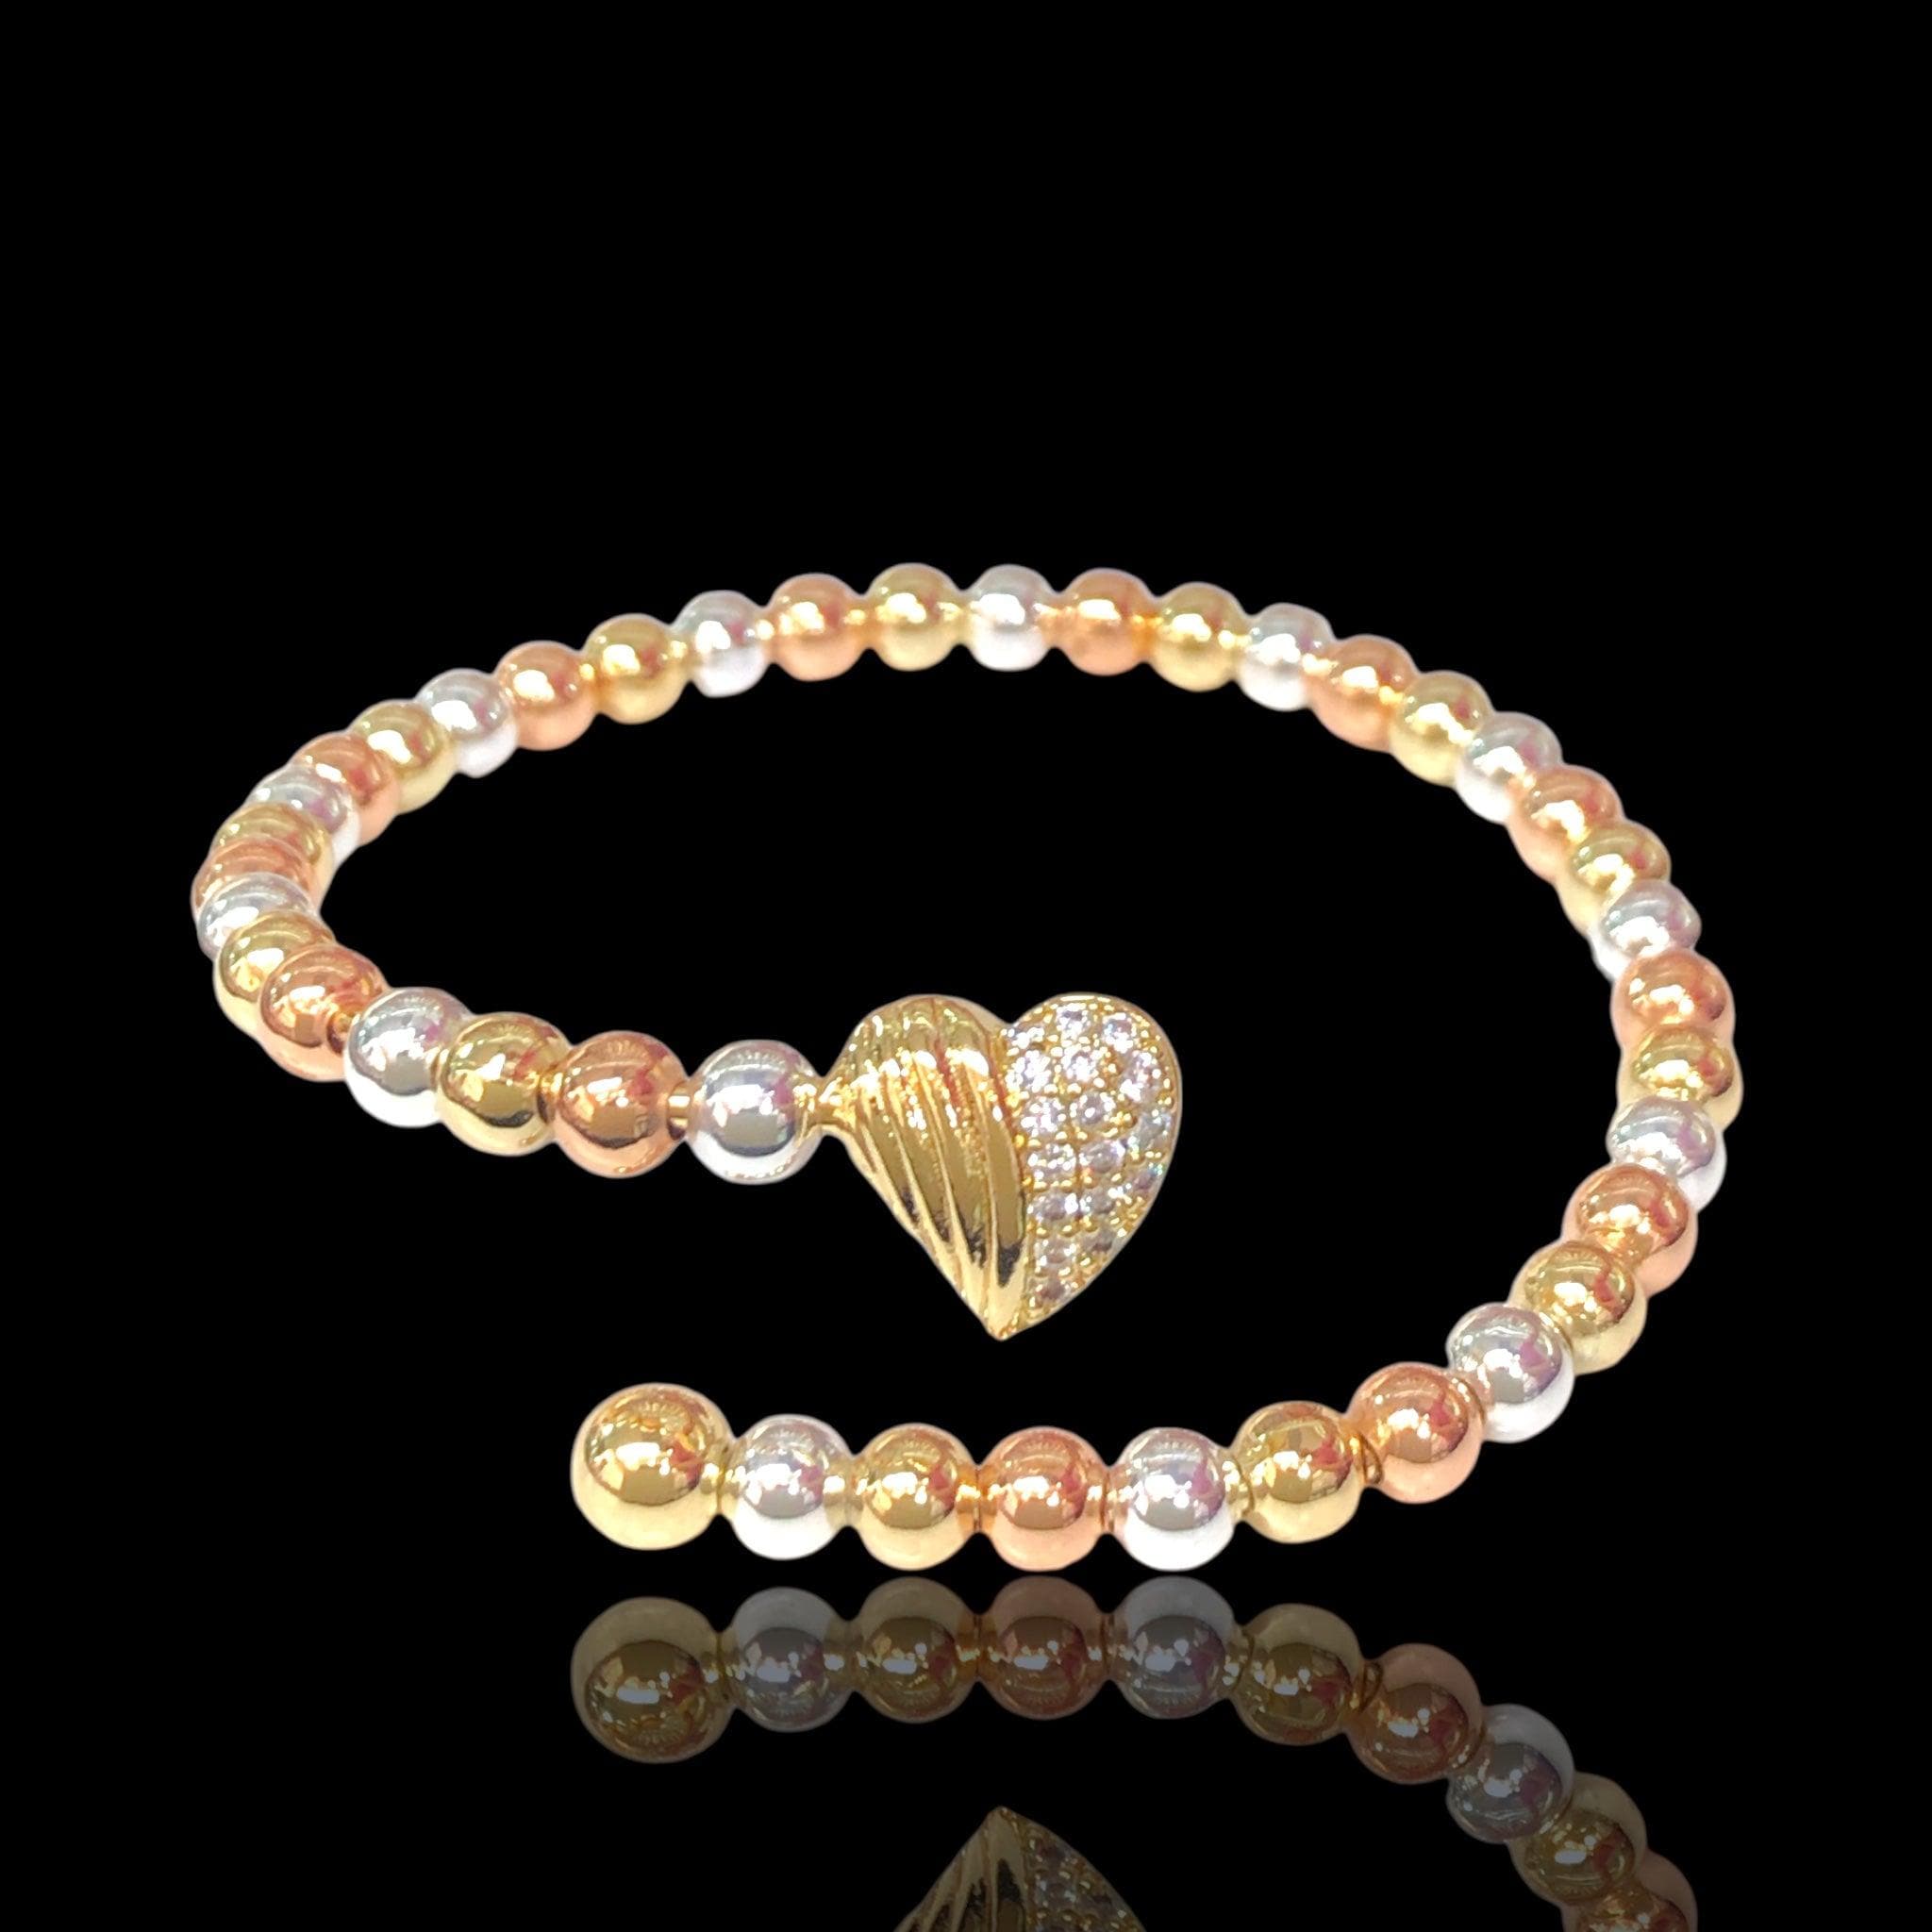 18k Gold Filled 5mm Beads Heart Bracelet Bangle- KUANIA ORO LAMINADO